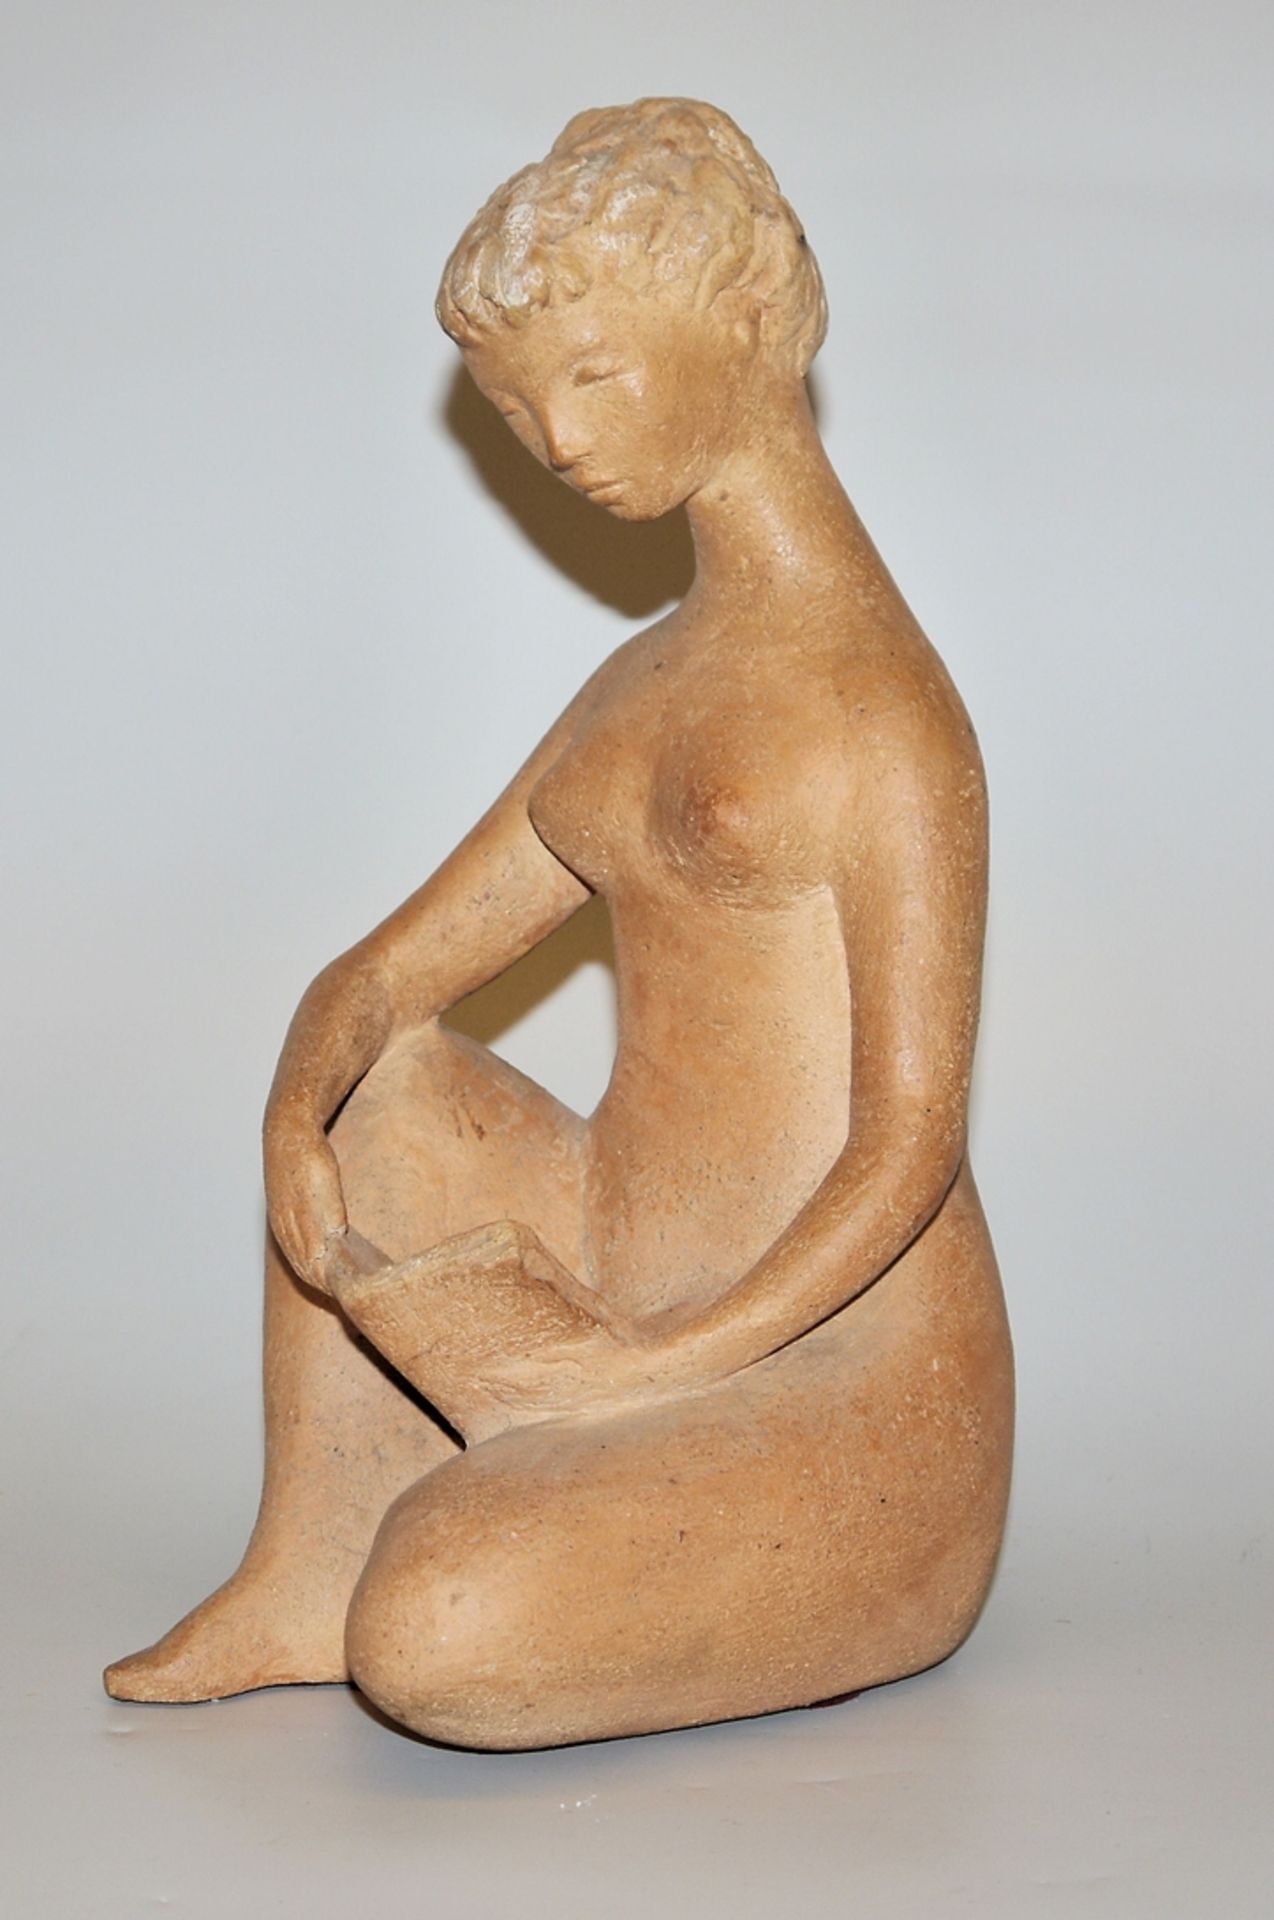 Käte Krakow, Lesende, terracotta sculpture c. 1955